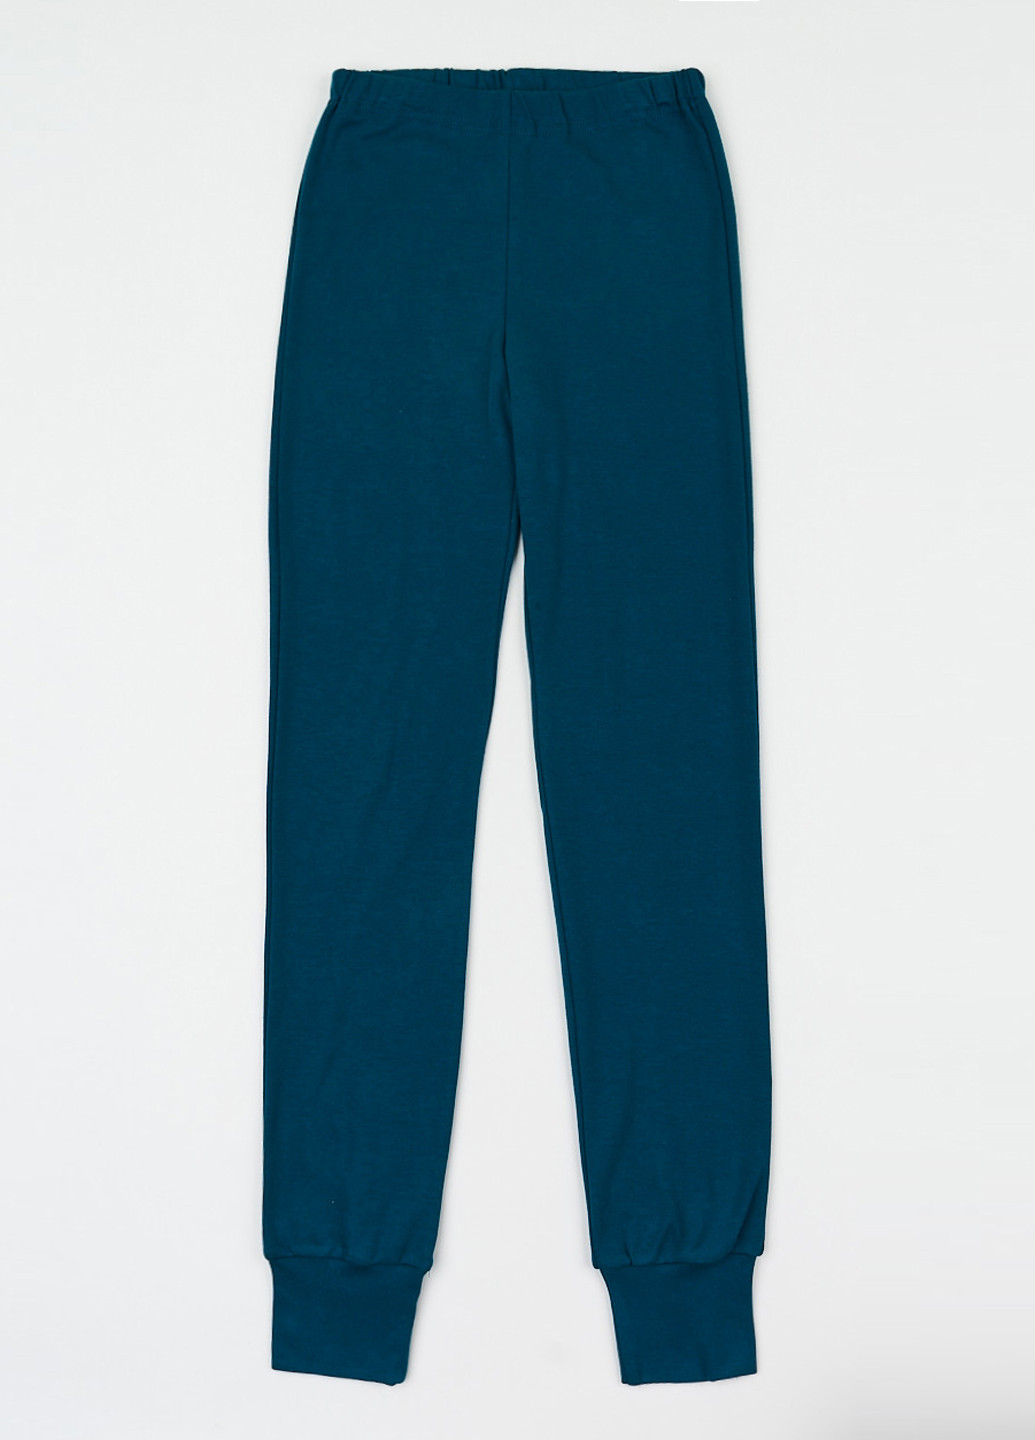 Темно-синяя всесезон пижама (свитшот, брюки) свитшот + брюки Z16